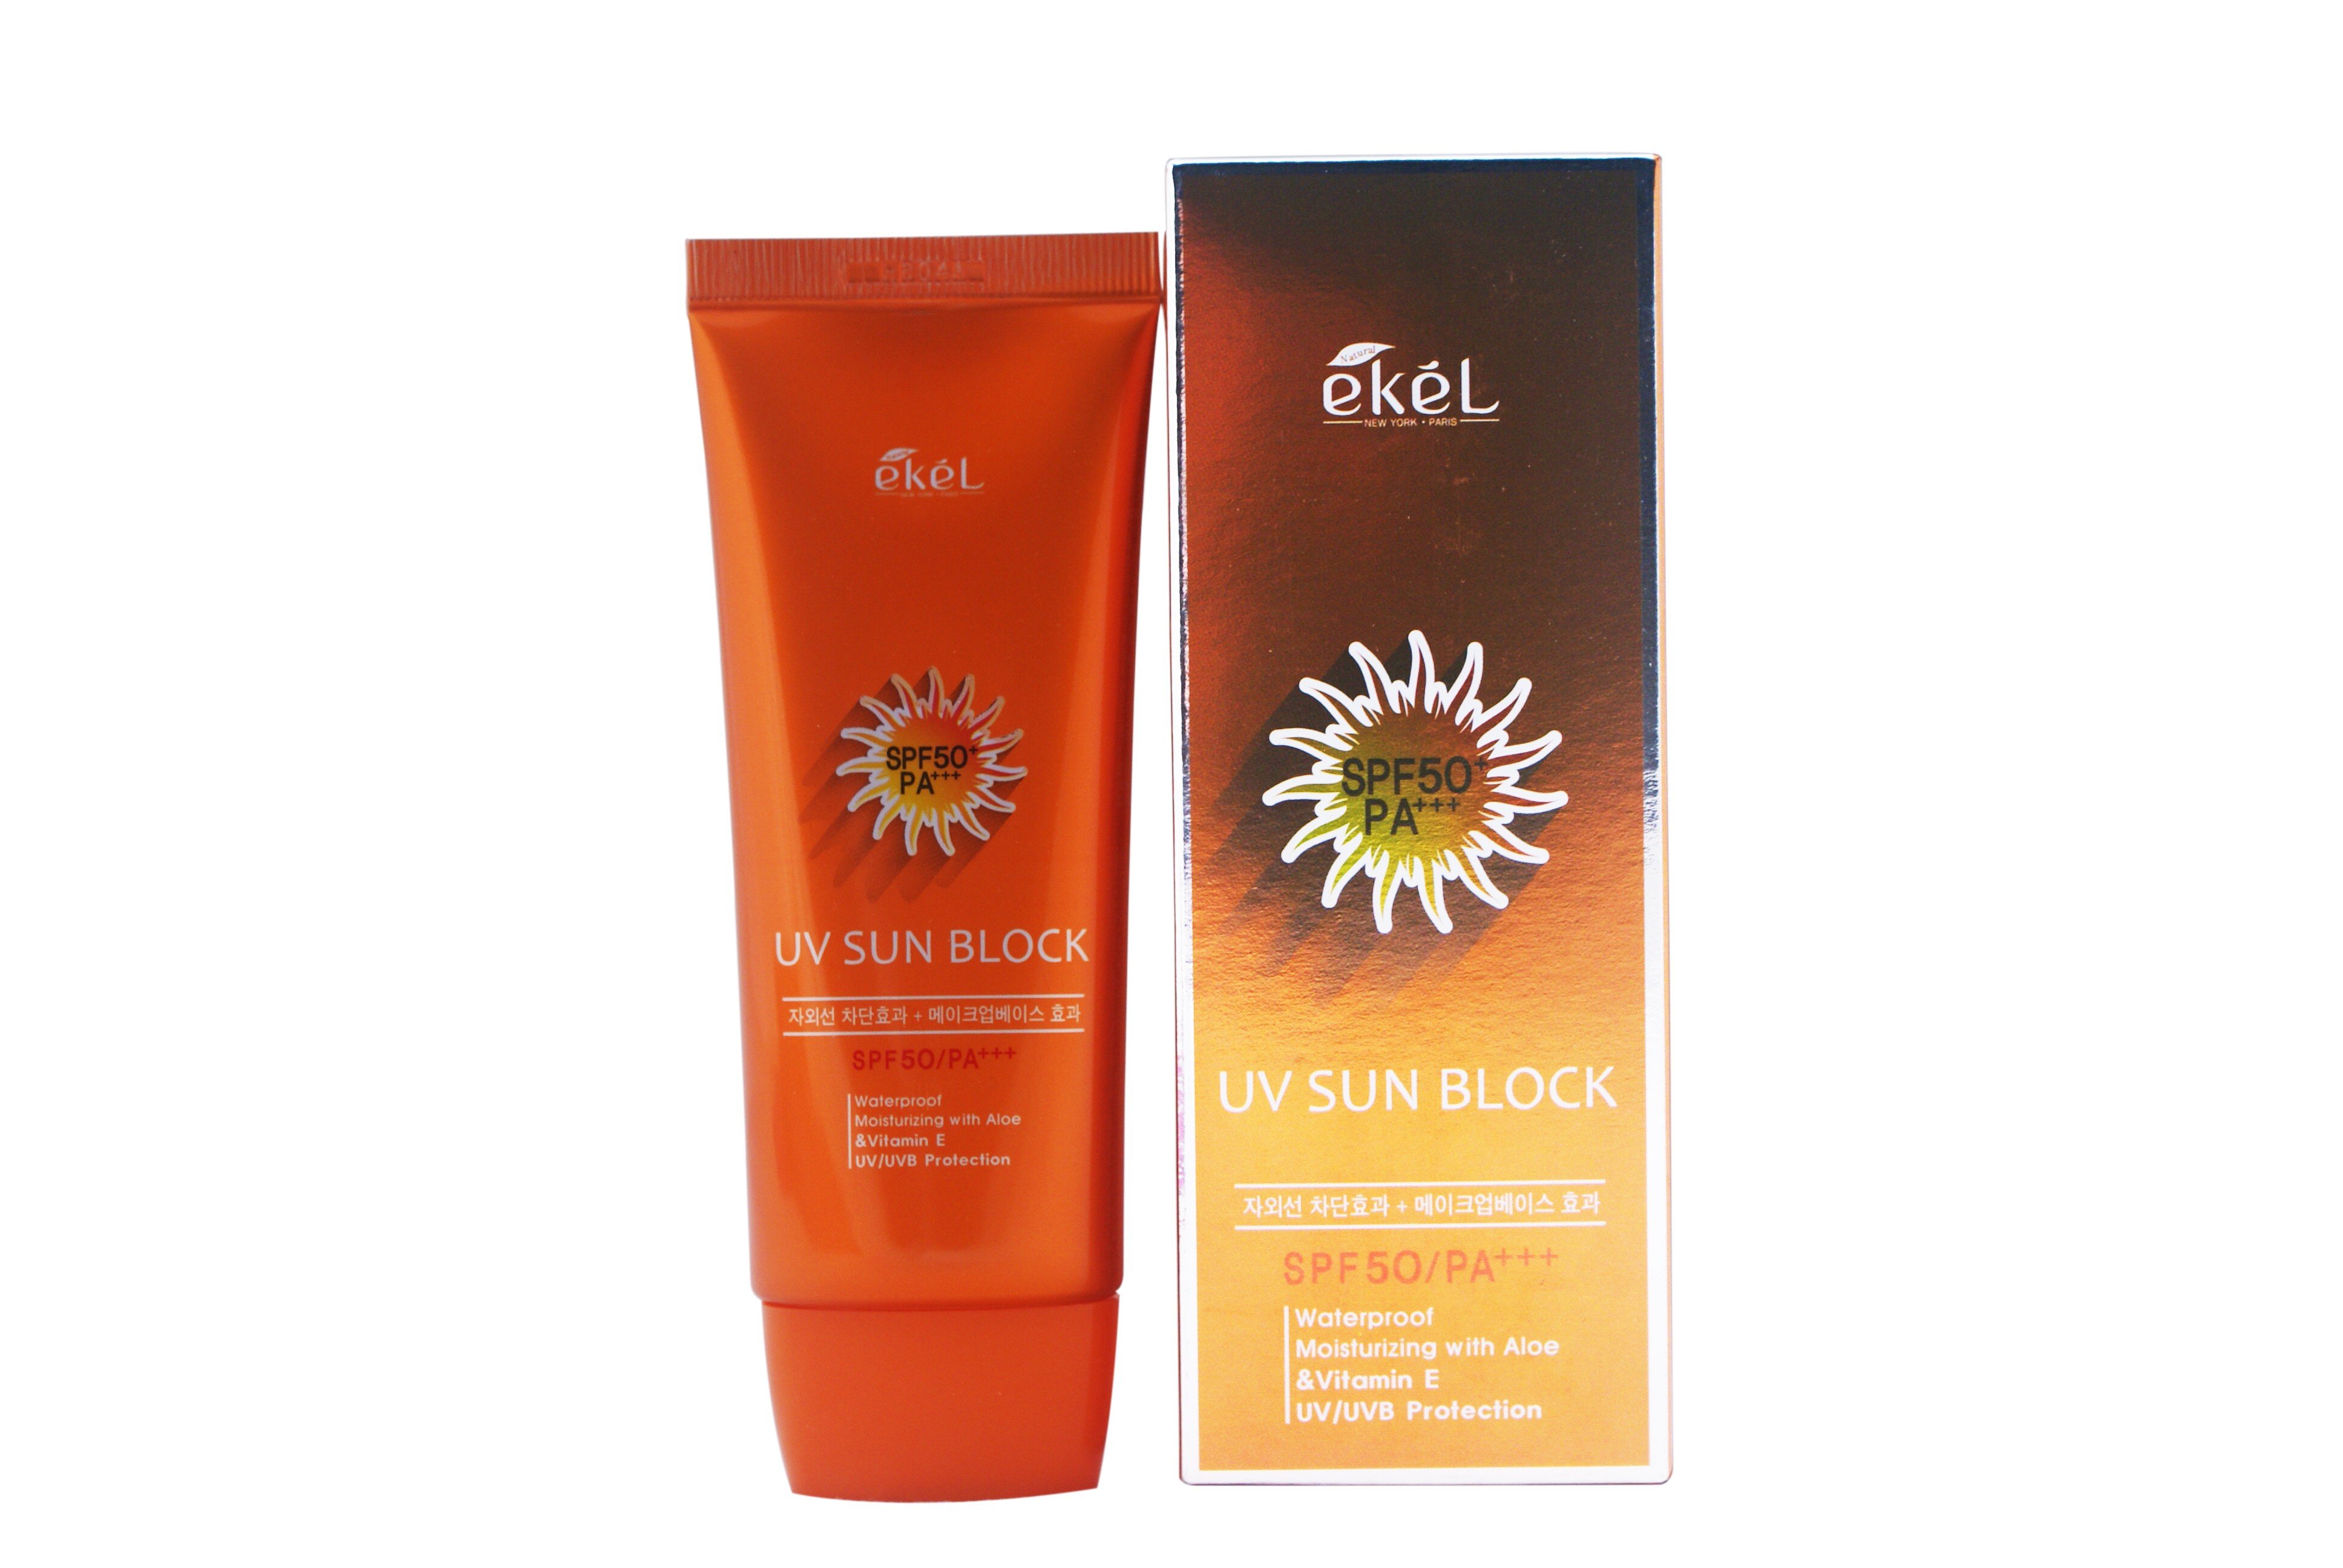 Ekel UV Sun Block spf50/pa+++. Солнцезащитный крем SPF 50 Ekel. 3w Cream крем BB солнцезащитный UV Sun Block BB Cream, 50ml. 3w Clinic солнцезащитный крем Multi Protection UV Sun.